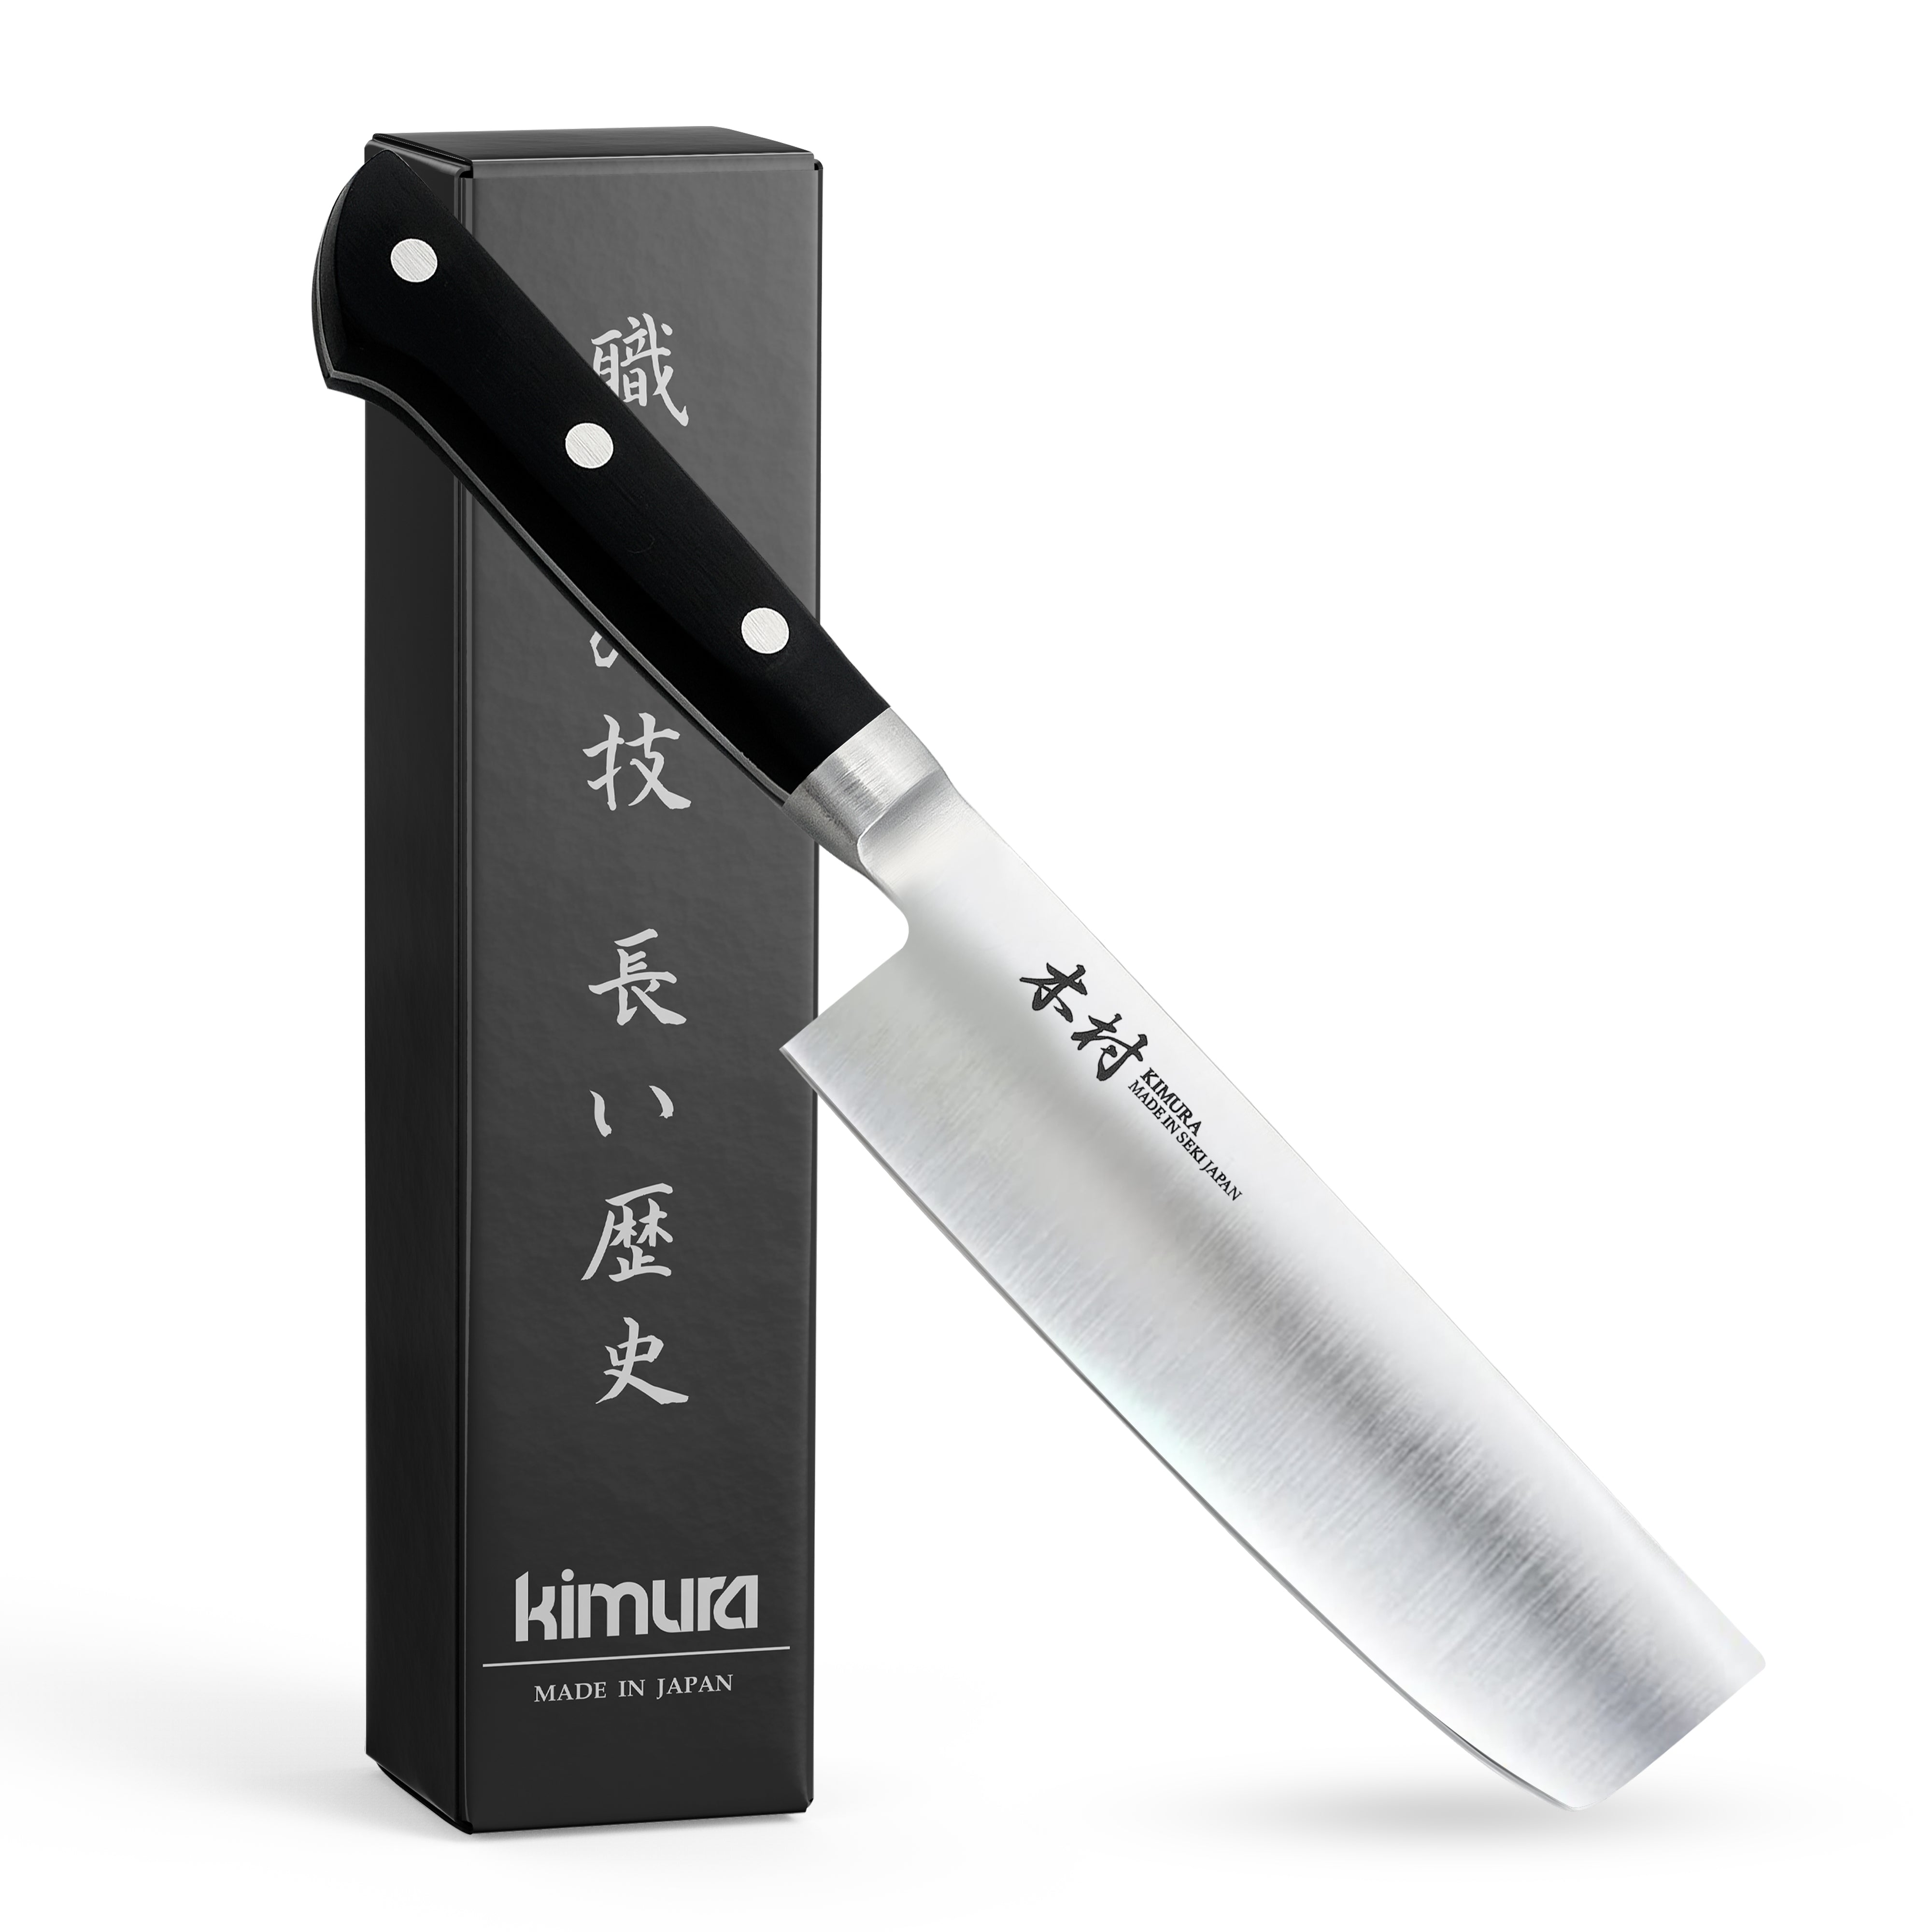 Jasni 8 inch chef's knife Set - Utility Kitchen Knife High Carbon